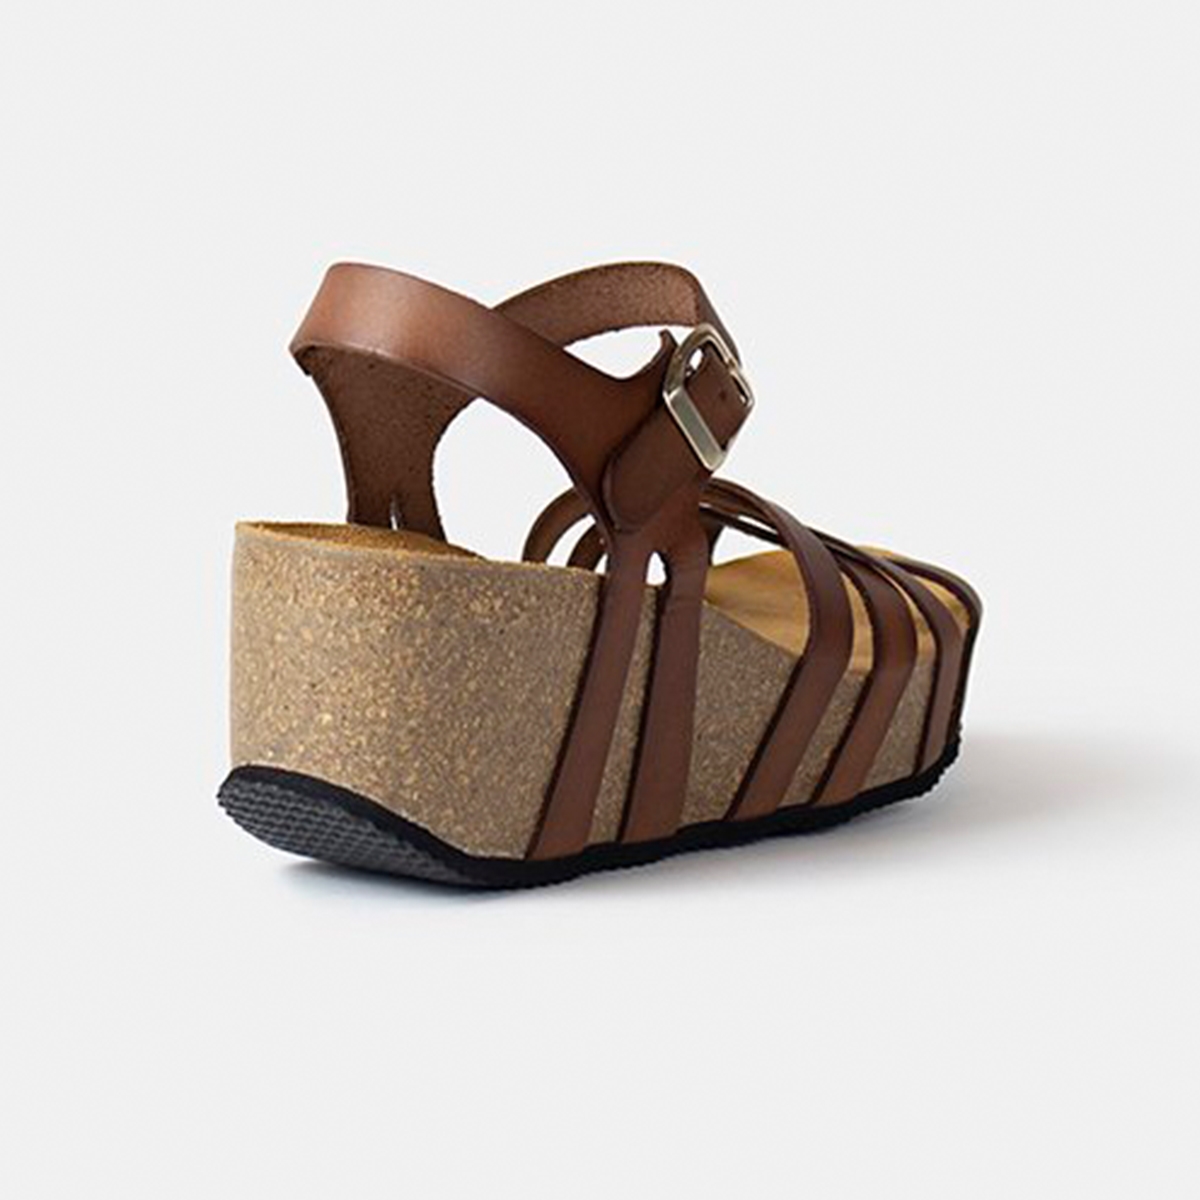 Mable Sandal Fra - Butik Unik Thisted